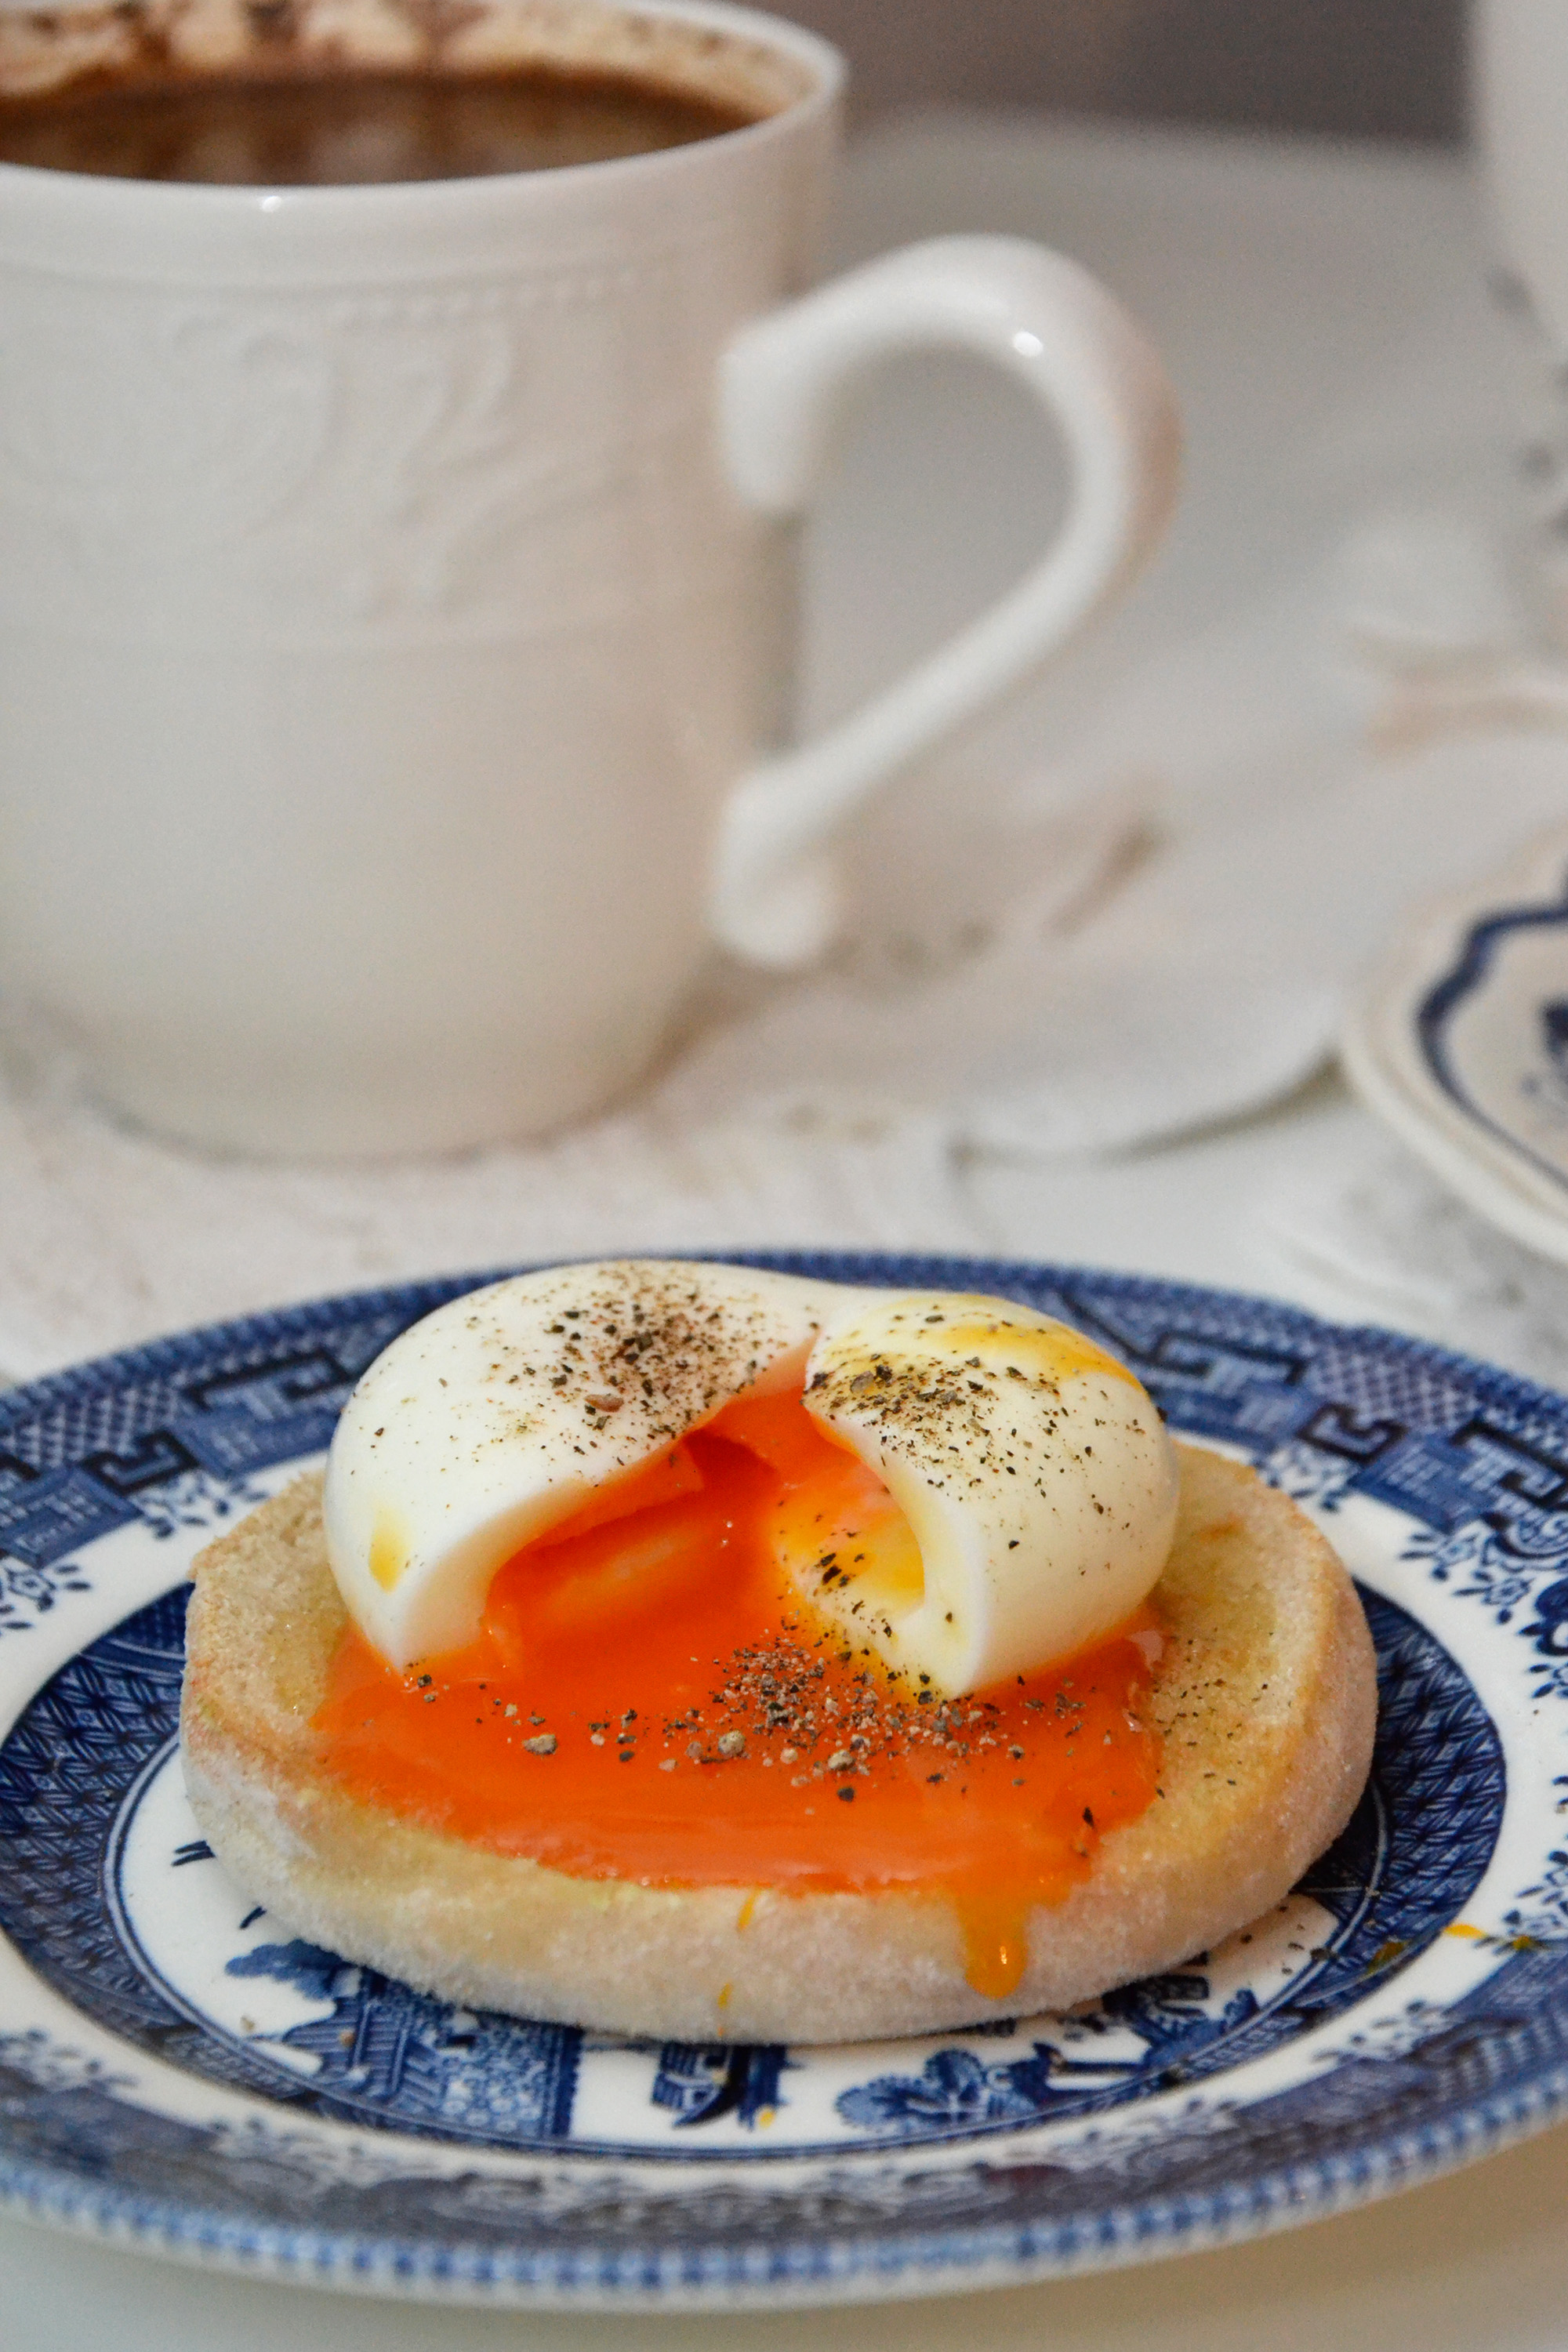 Boiled egg photo